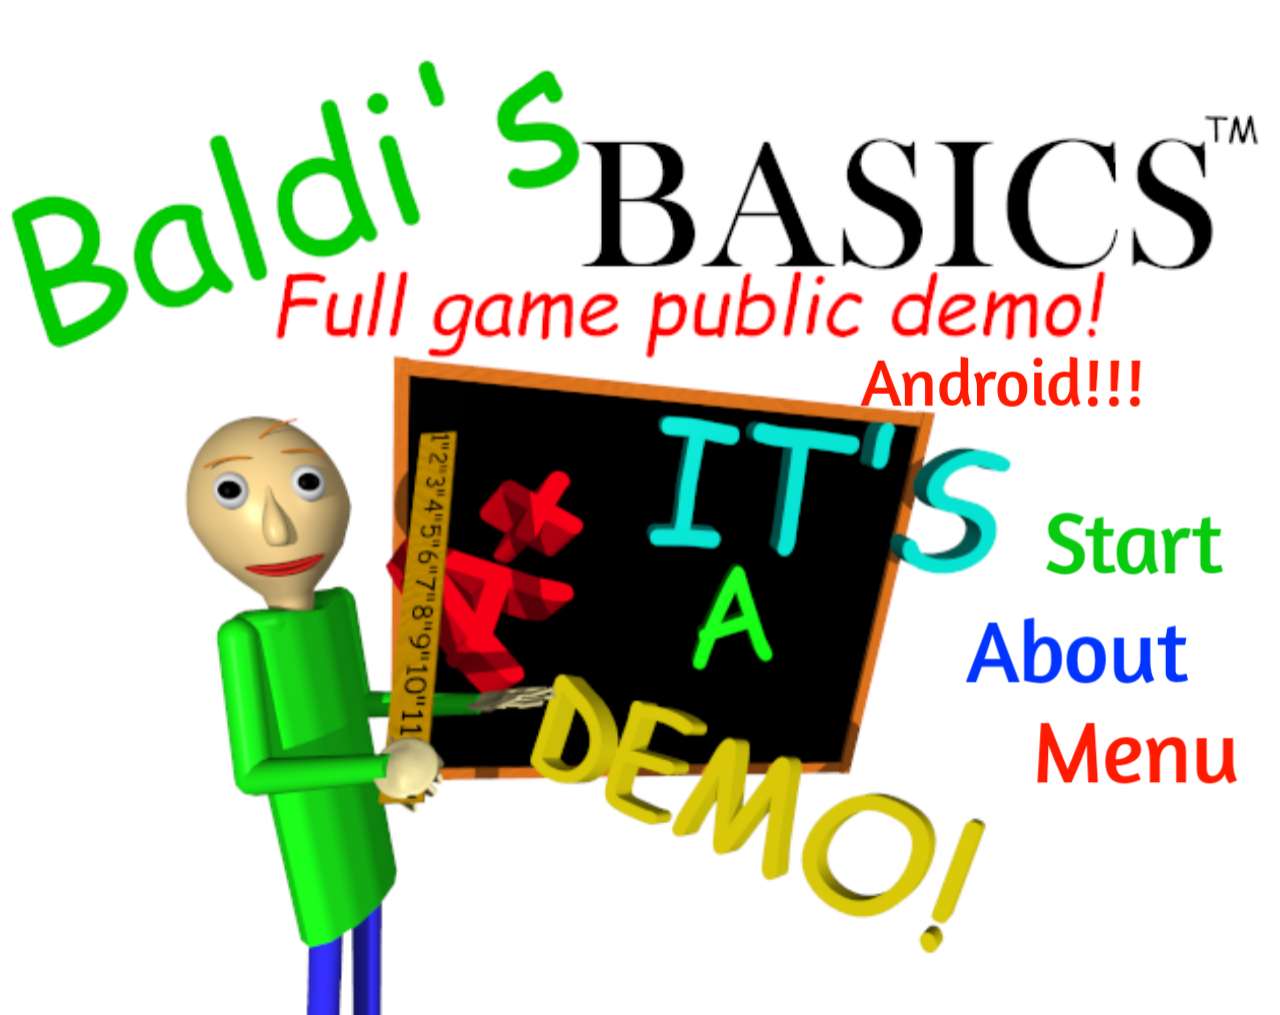 Baldis basics game public demo. БАЛДИ игра. Игра Baldi's Basics. Обложка Baldi s Basics. БАЛДИ логотип игры.